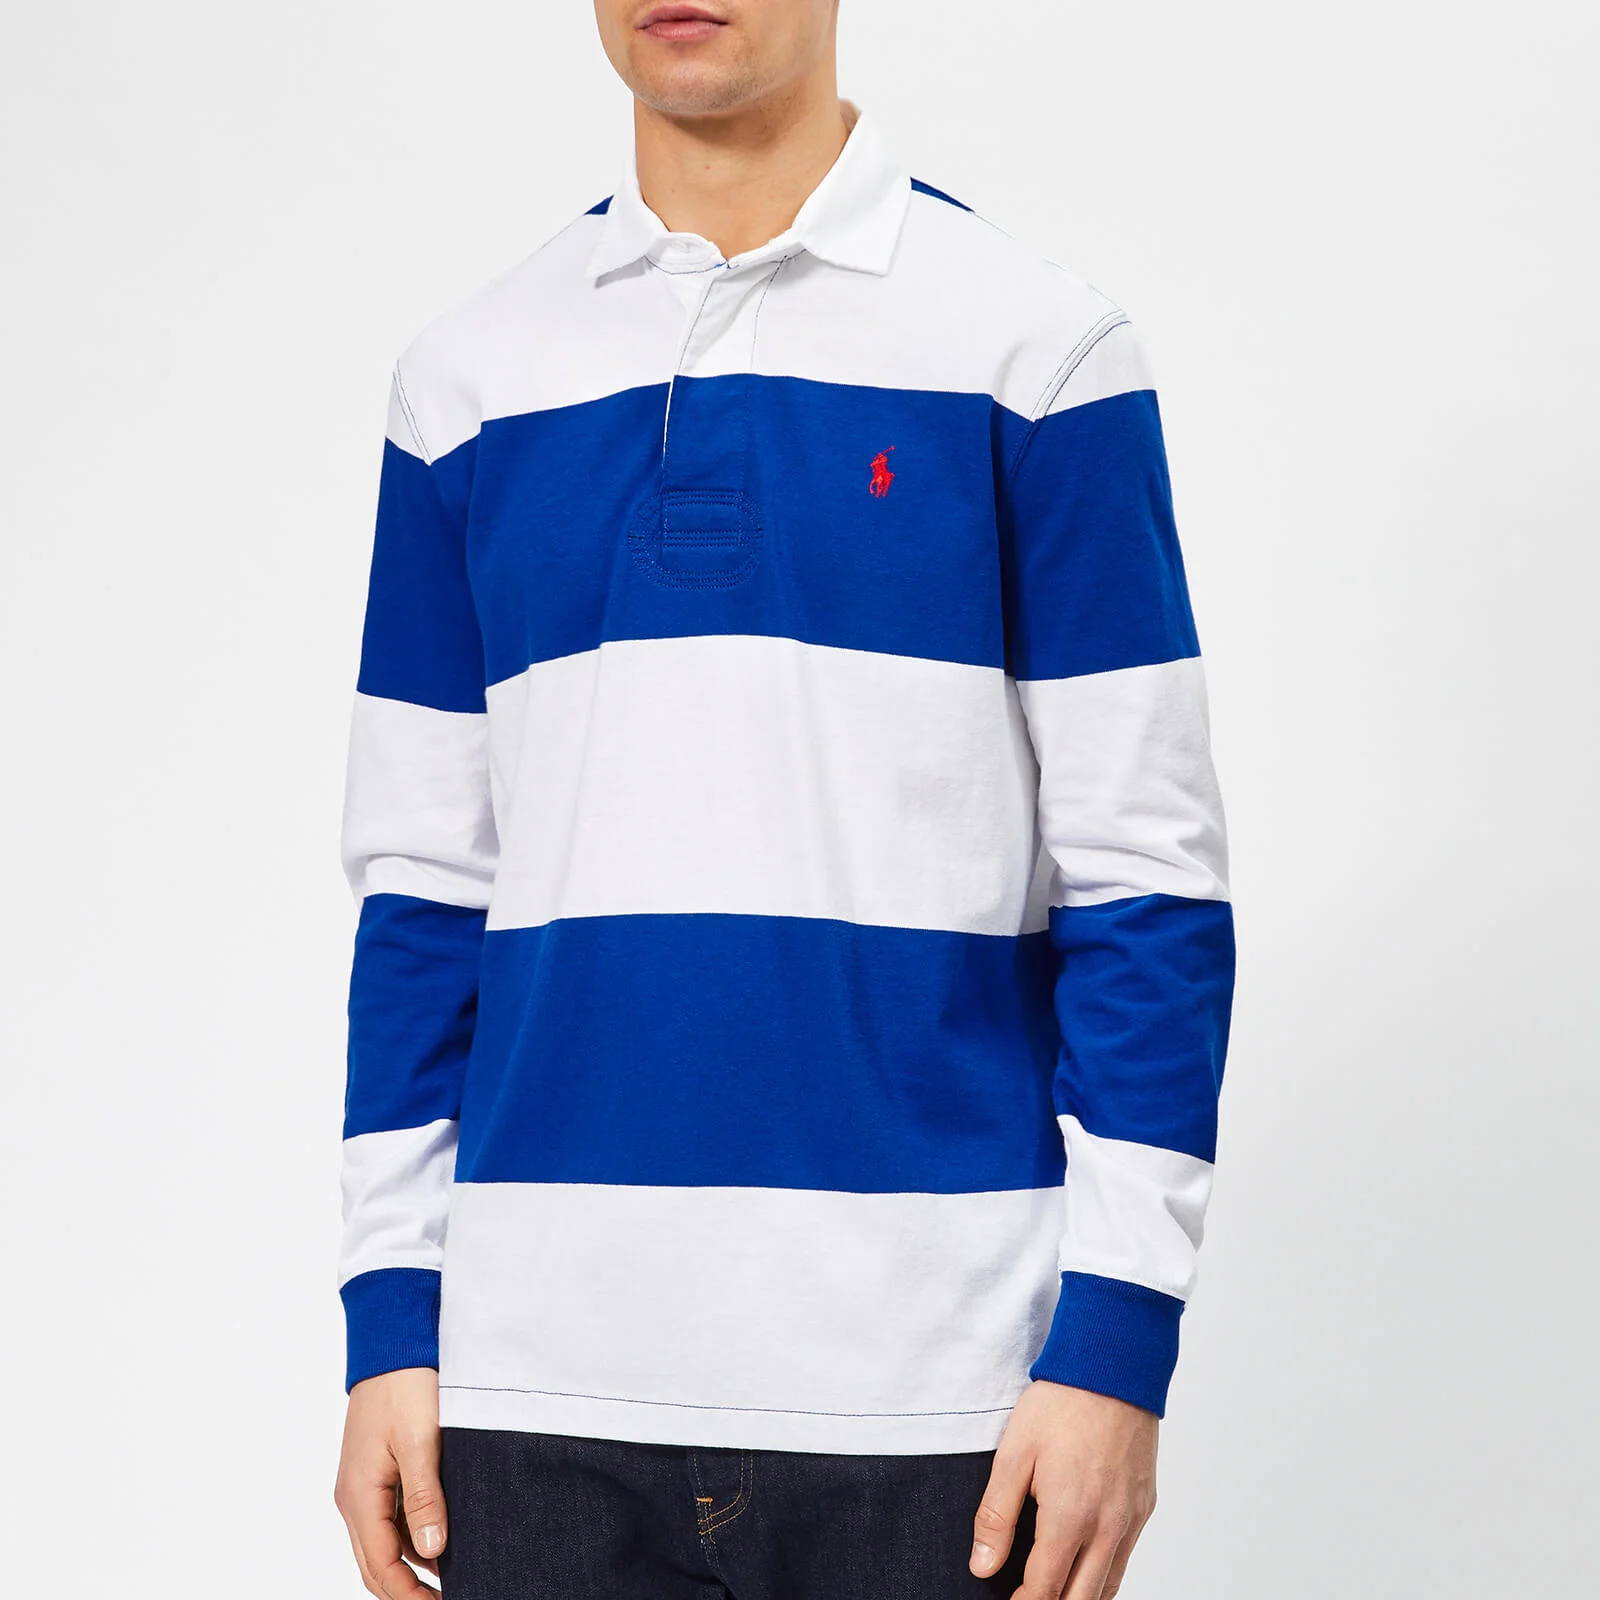 Polo Ralph Lauren Men's Stripe Rugby Shirt - Sapphire Star/Classic Oxford Image 1